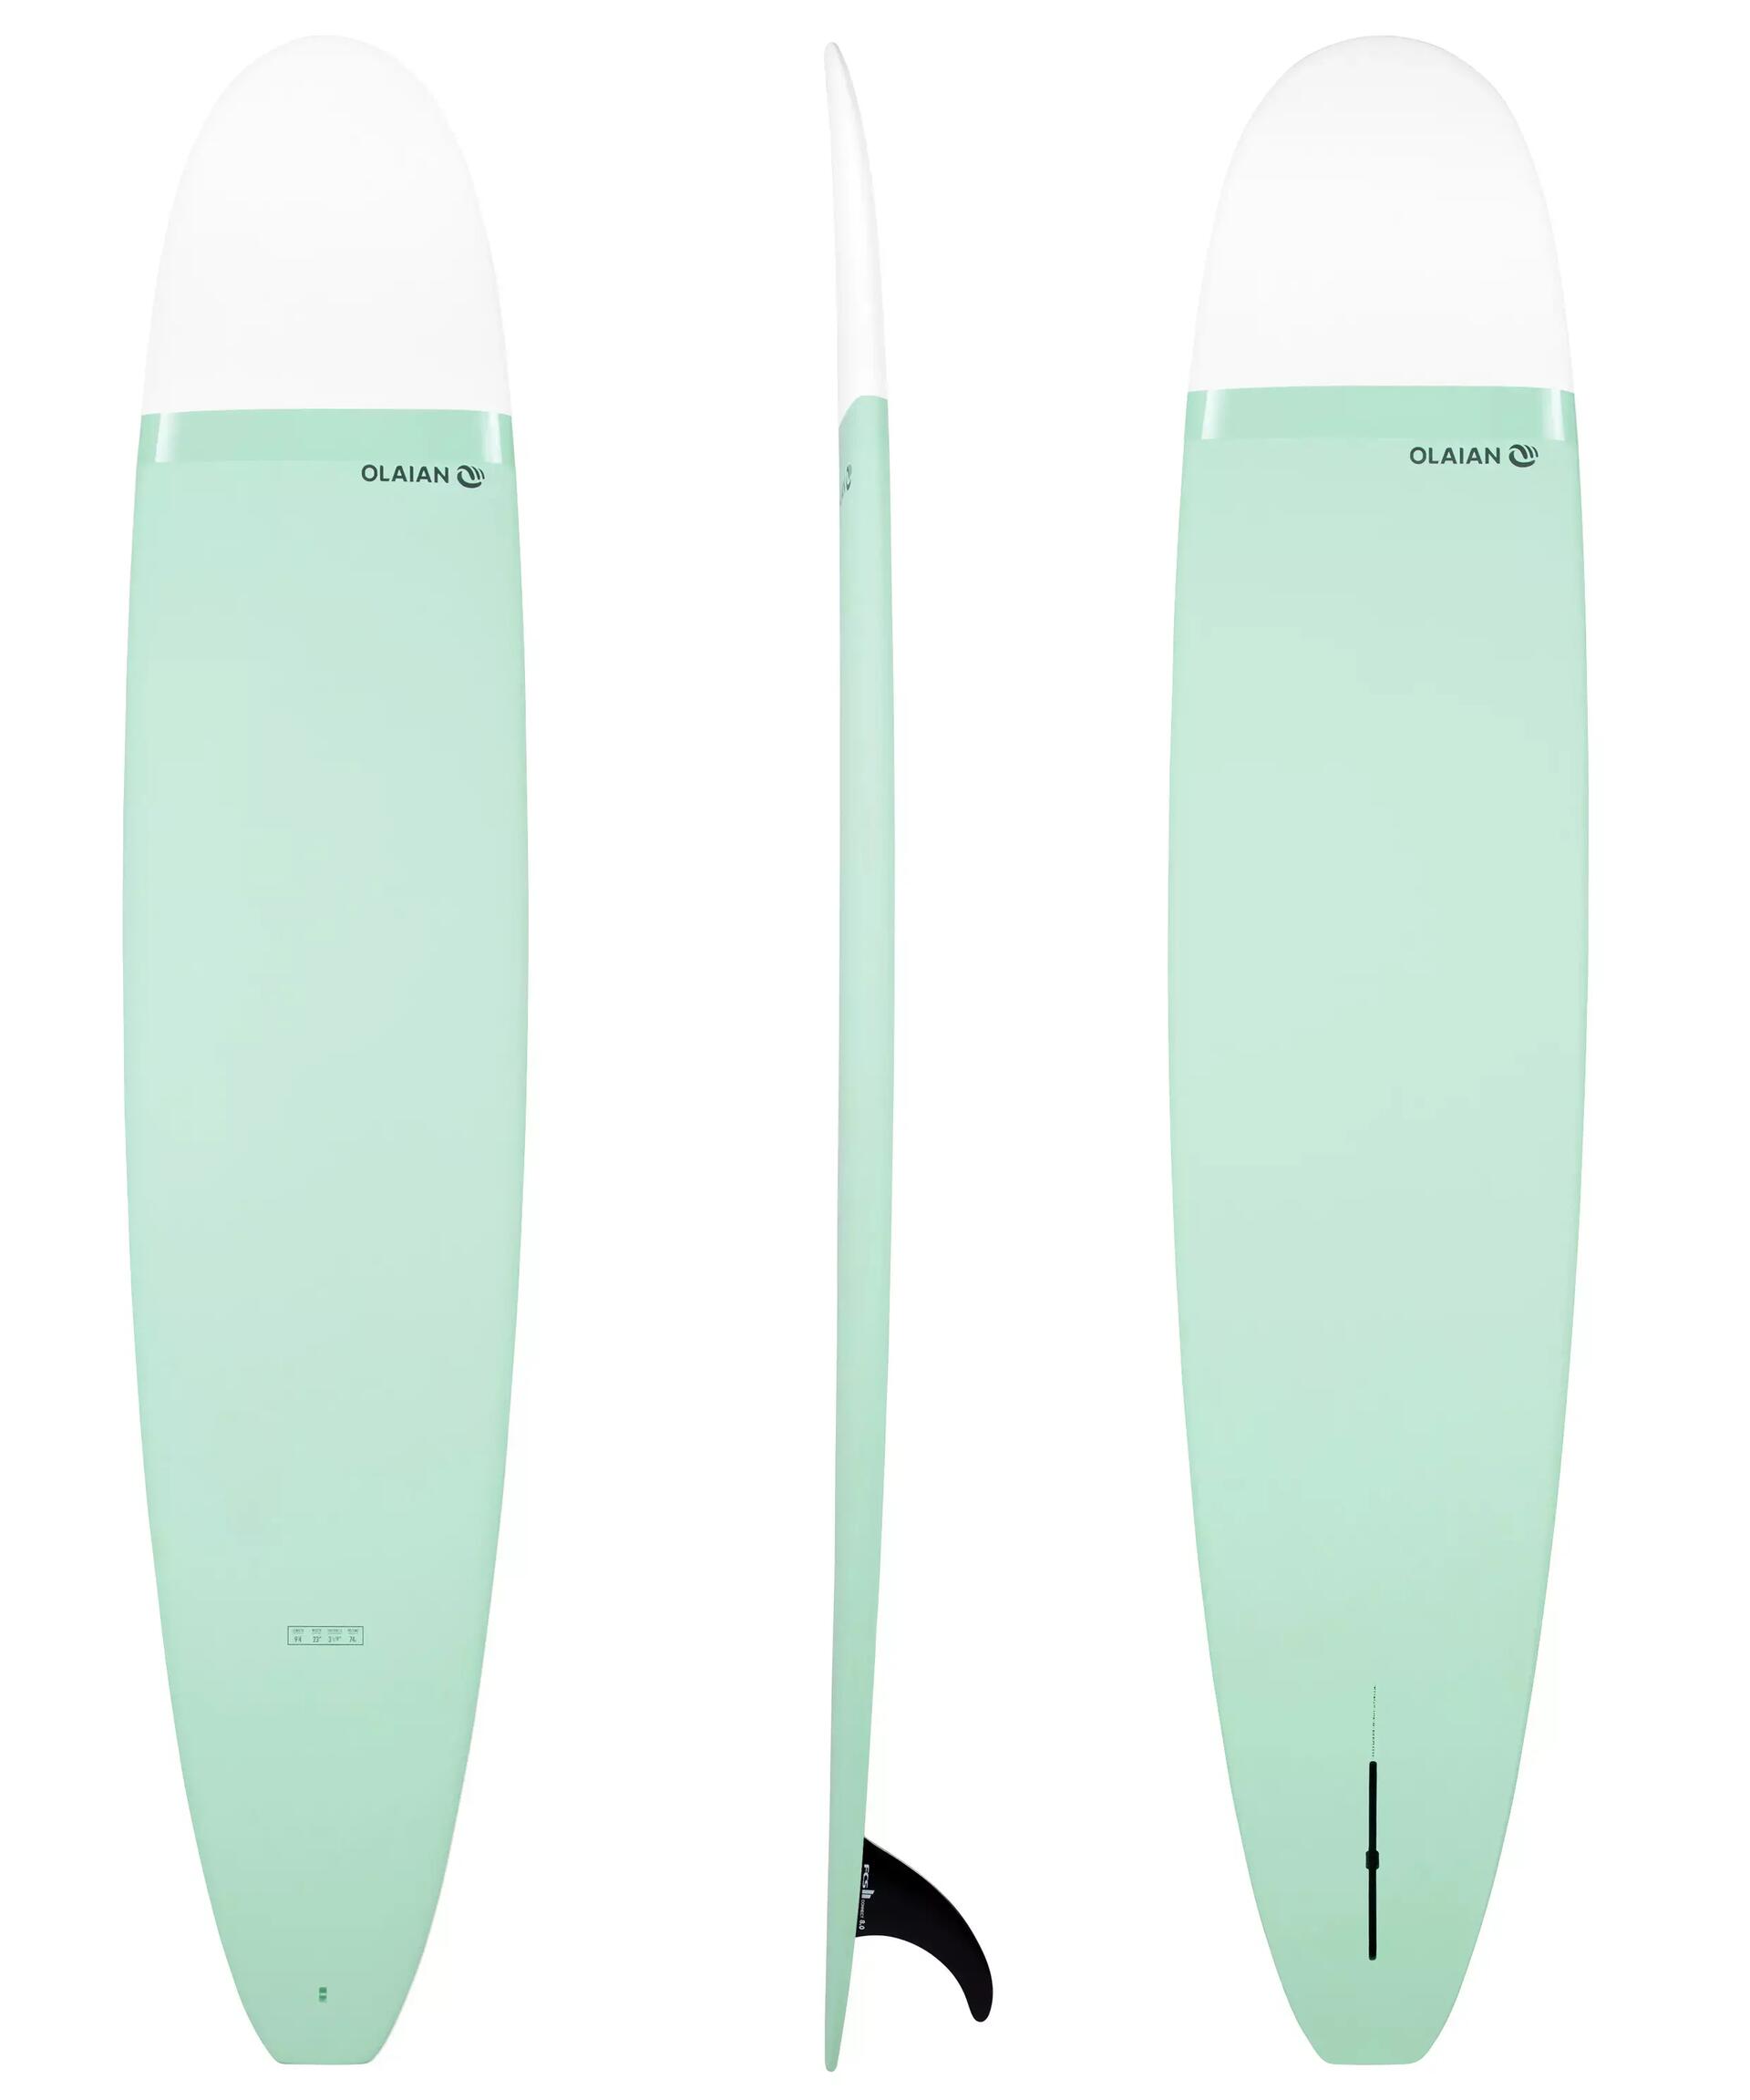 Surfboard testen? | Try before you buy | Decathlon.nl